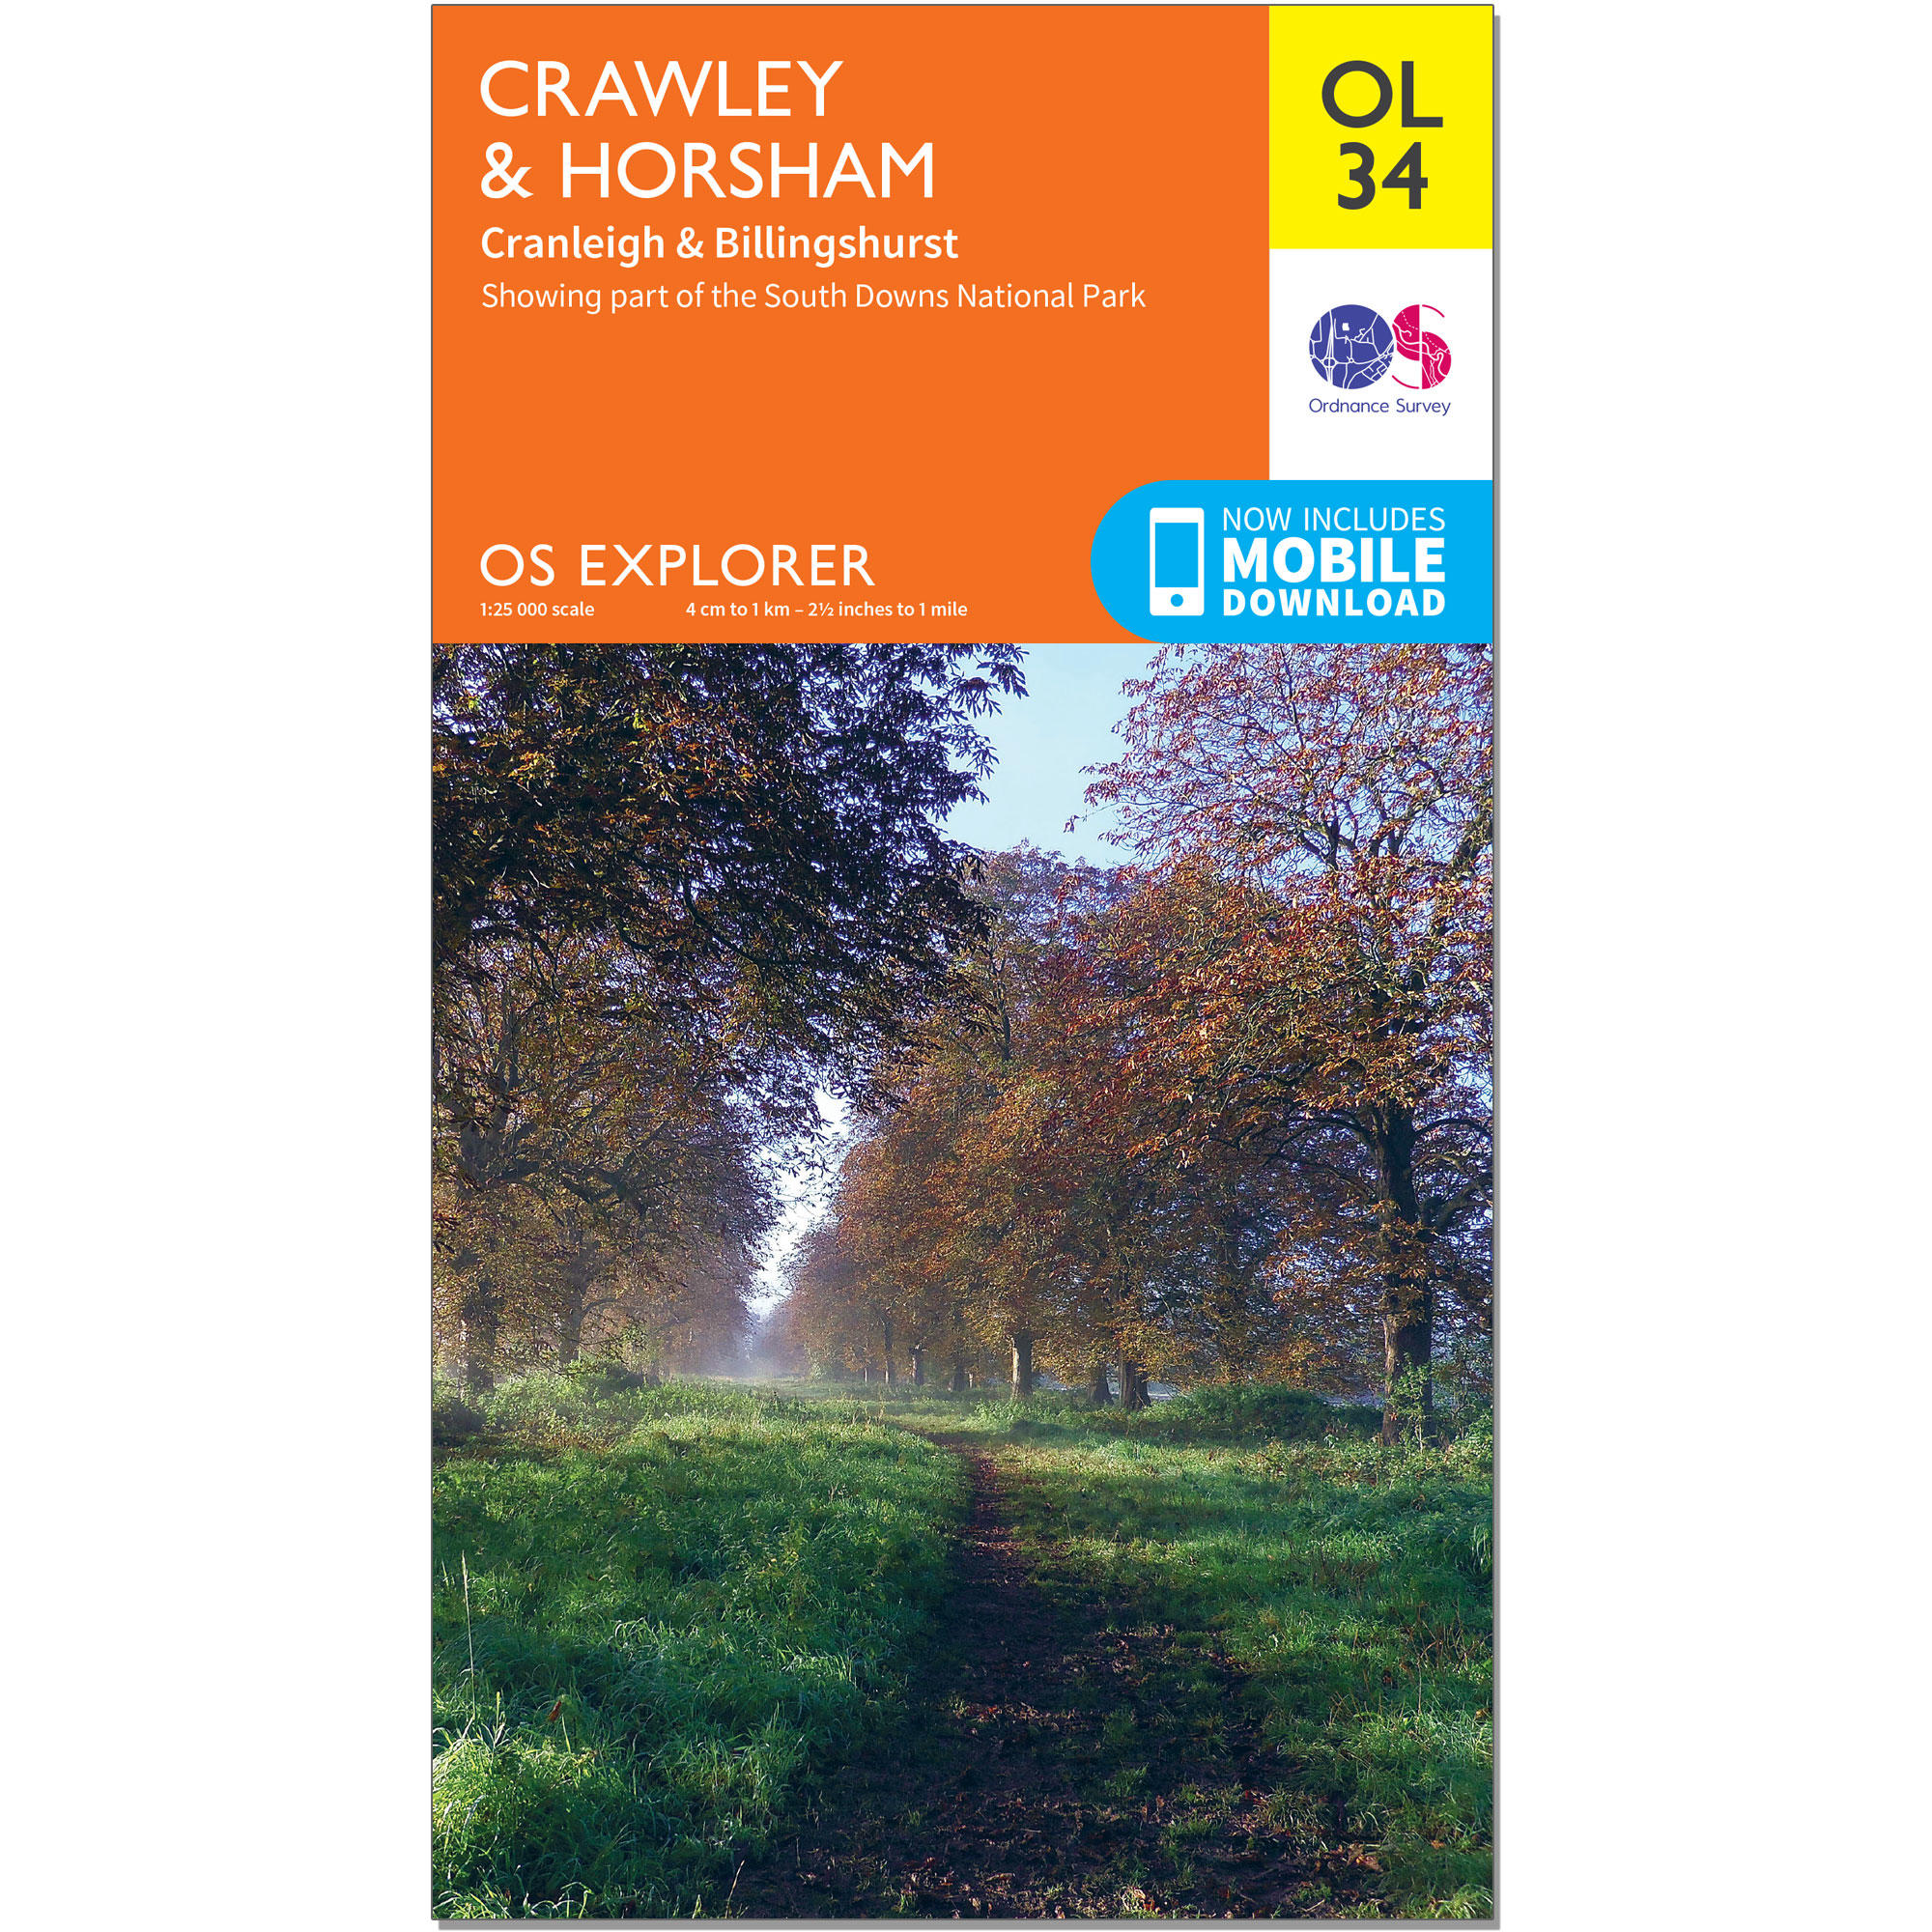 ORDNANCE SURVEY OS Explorer Leisure Map - Crawley & Horsham